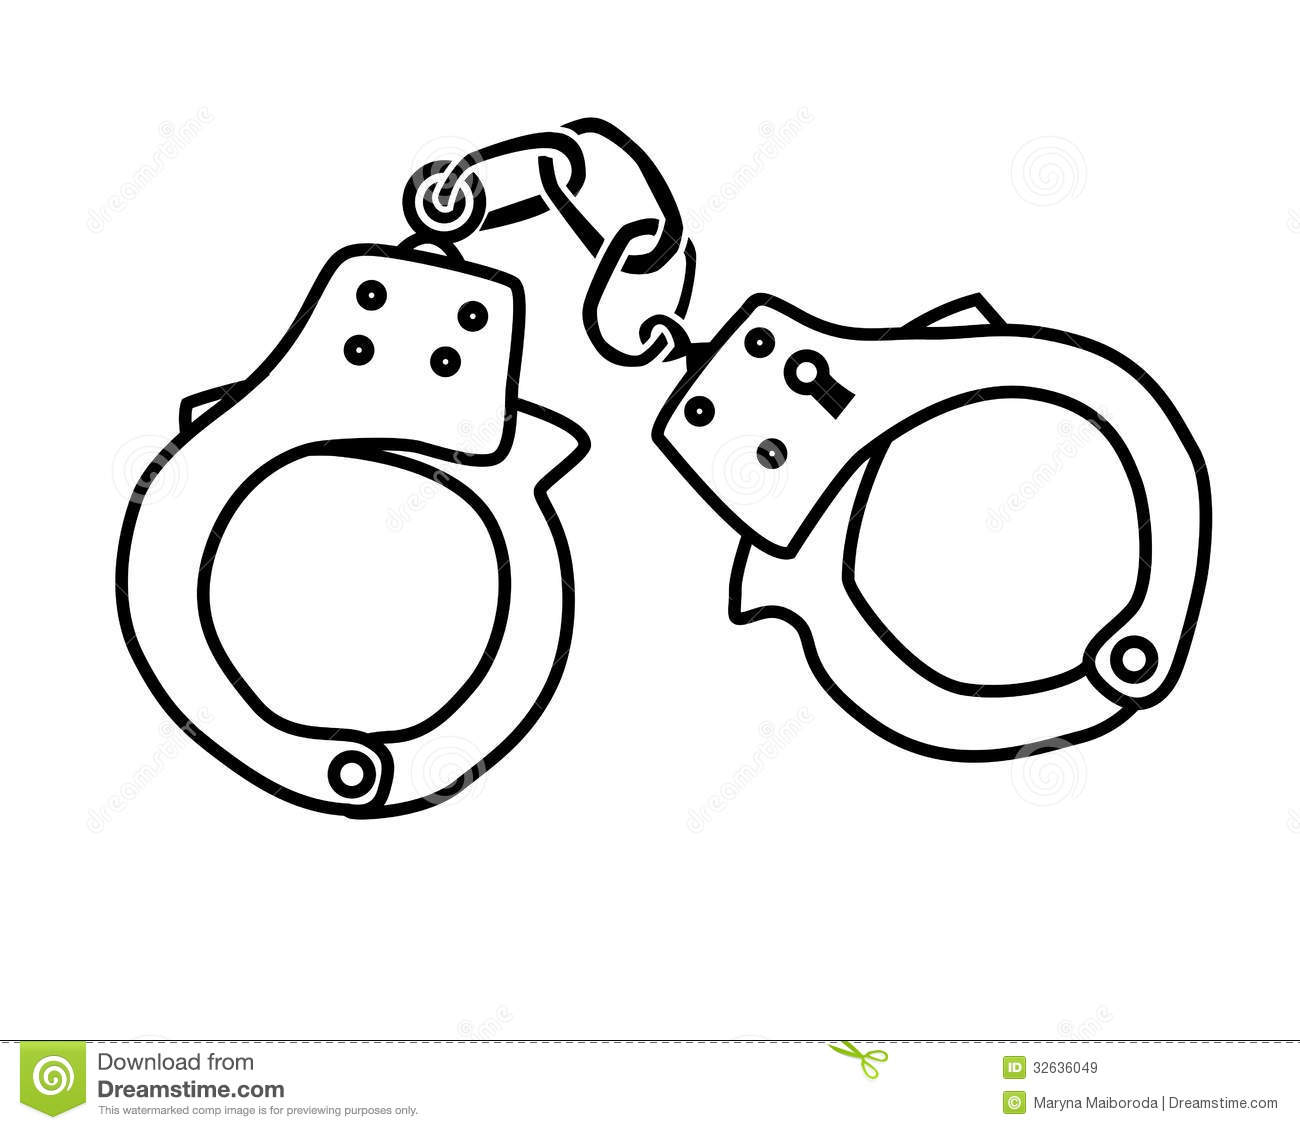 Handcuffs clipart black.